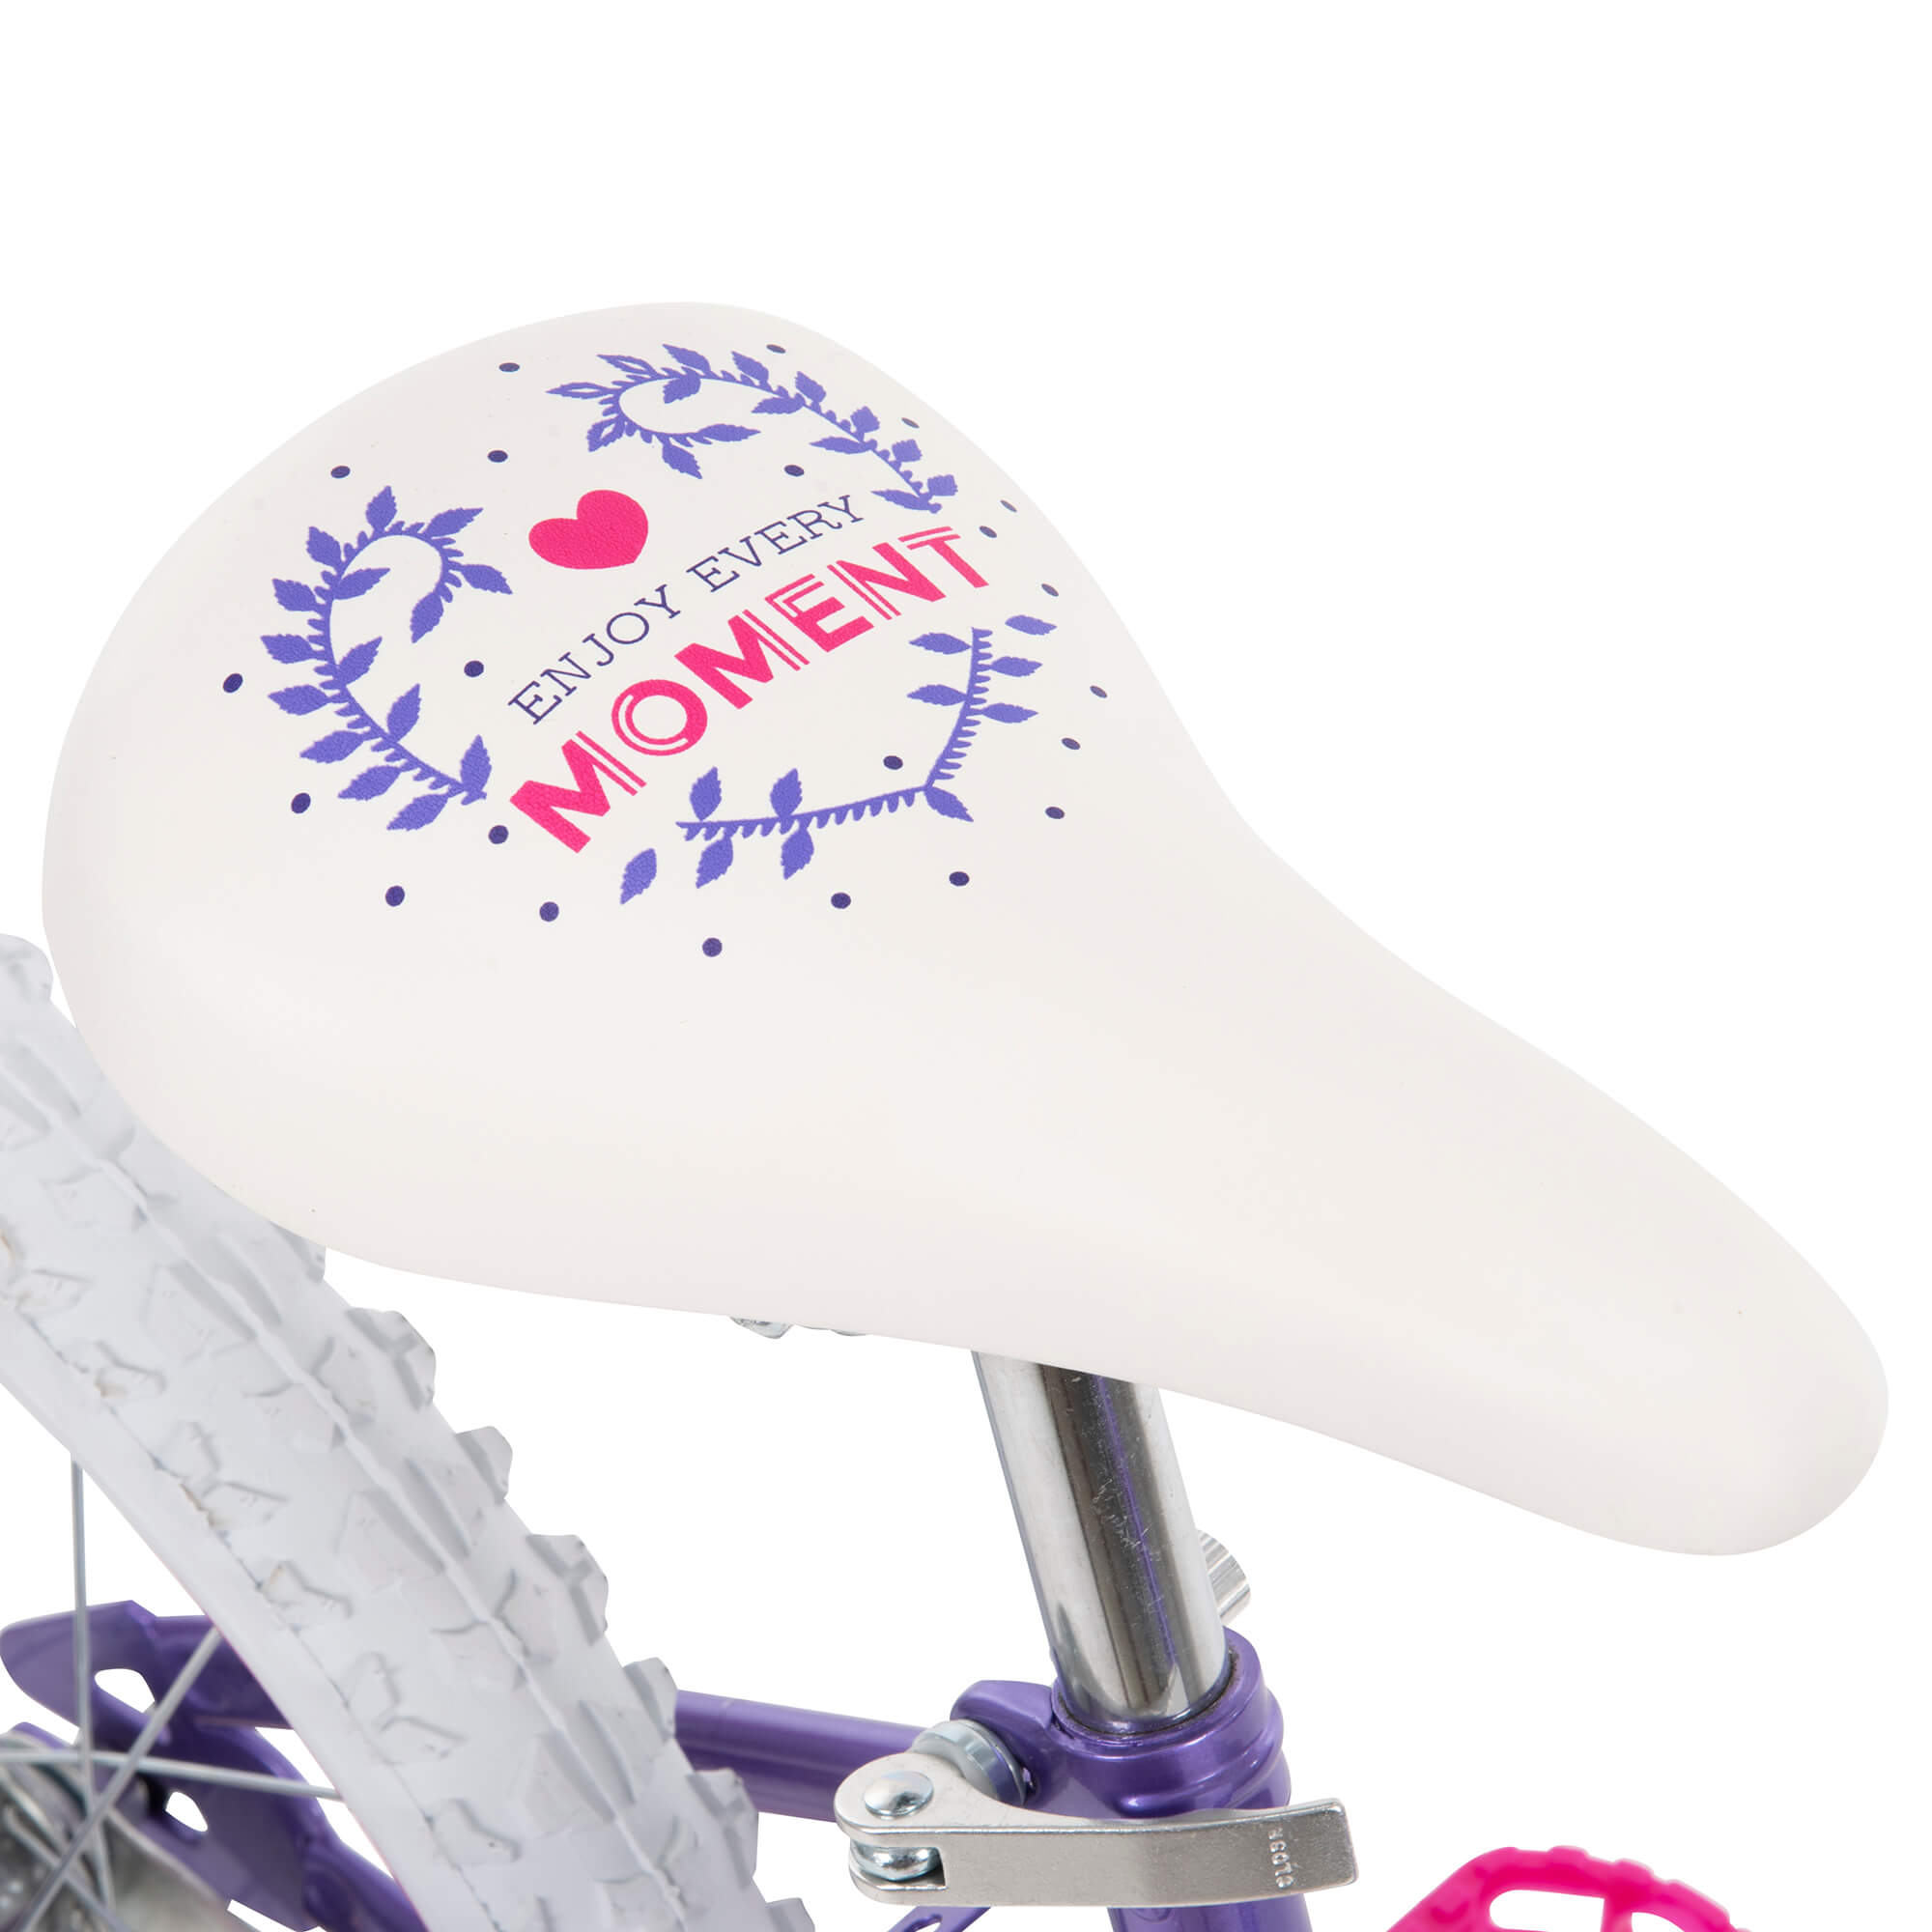 Huffy 20" Sea Star Girls Bike for Kids, Purple - image 3 of 7